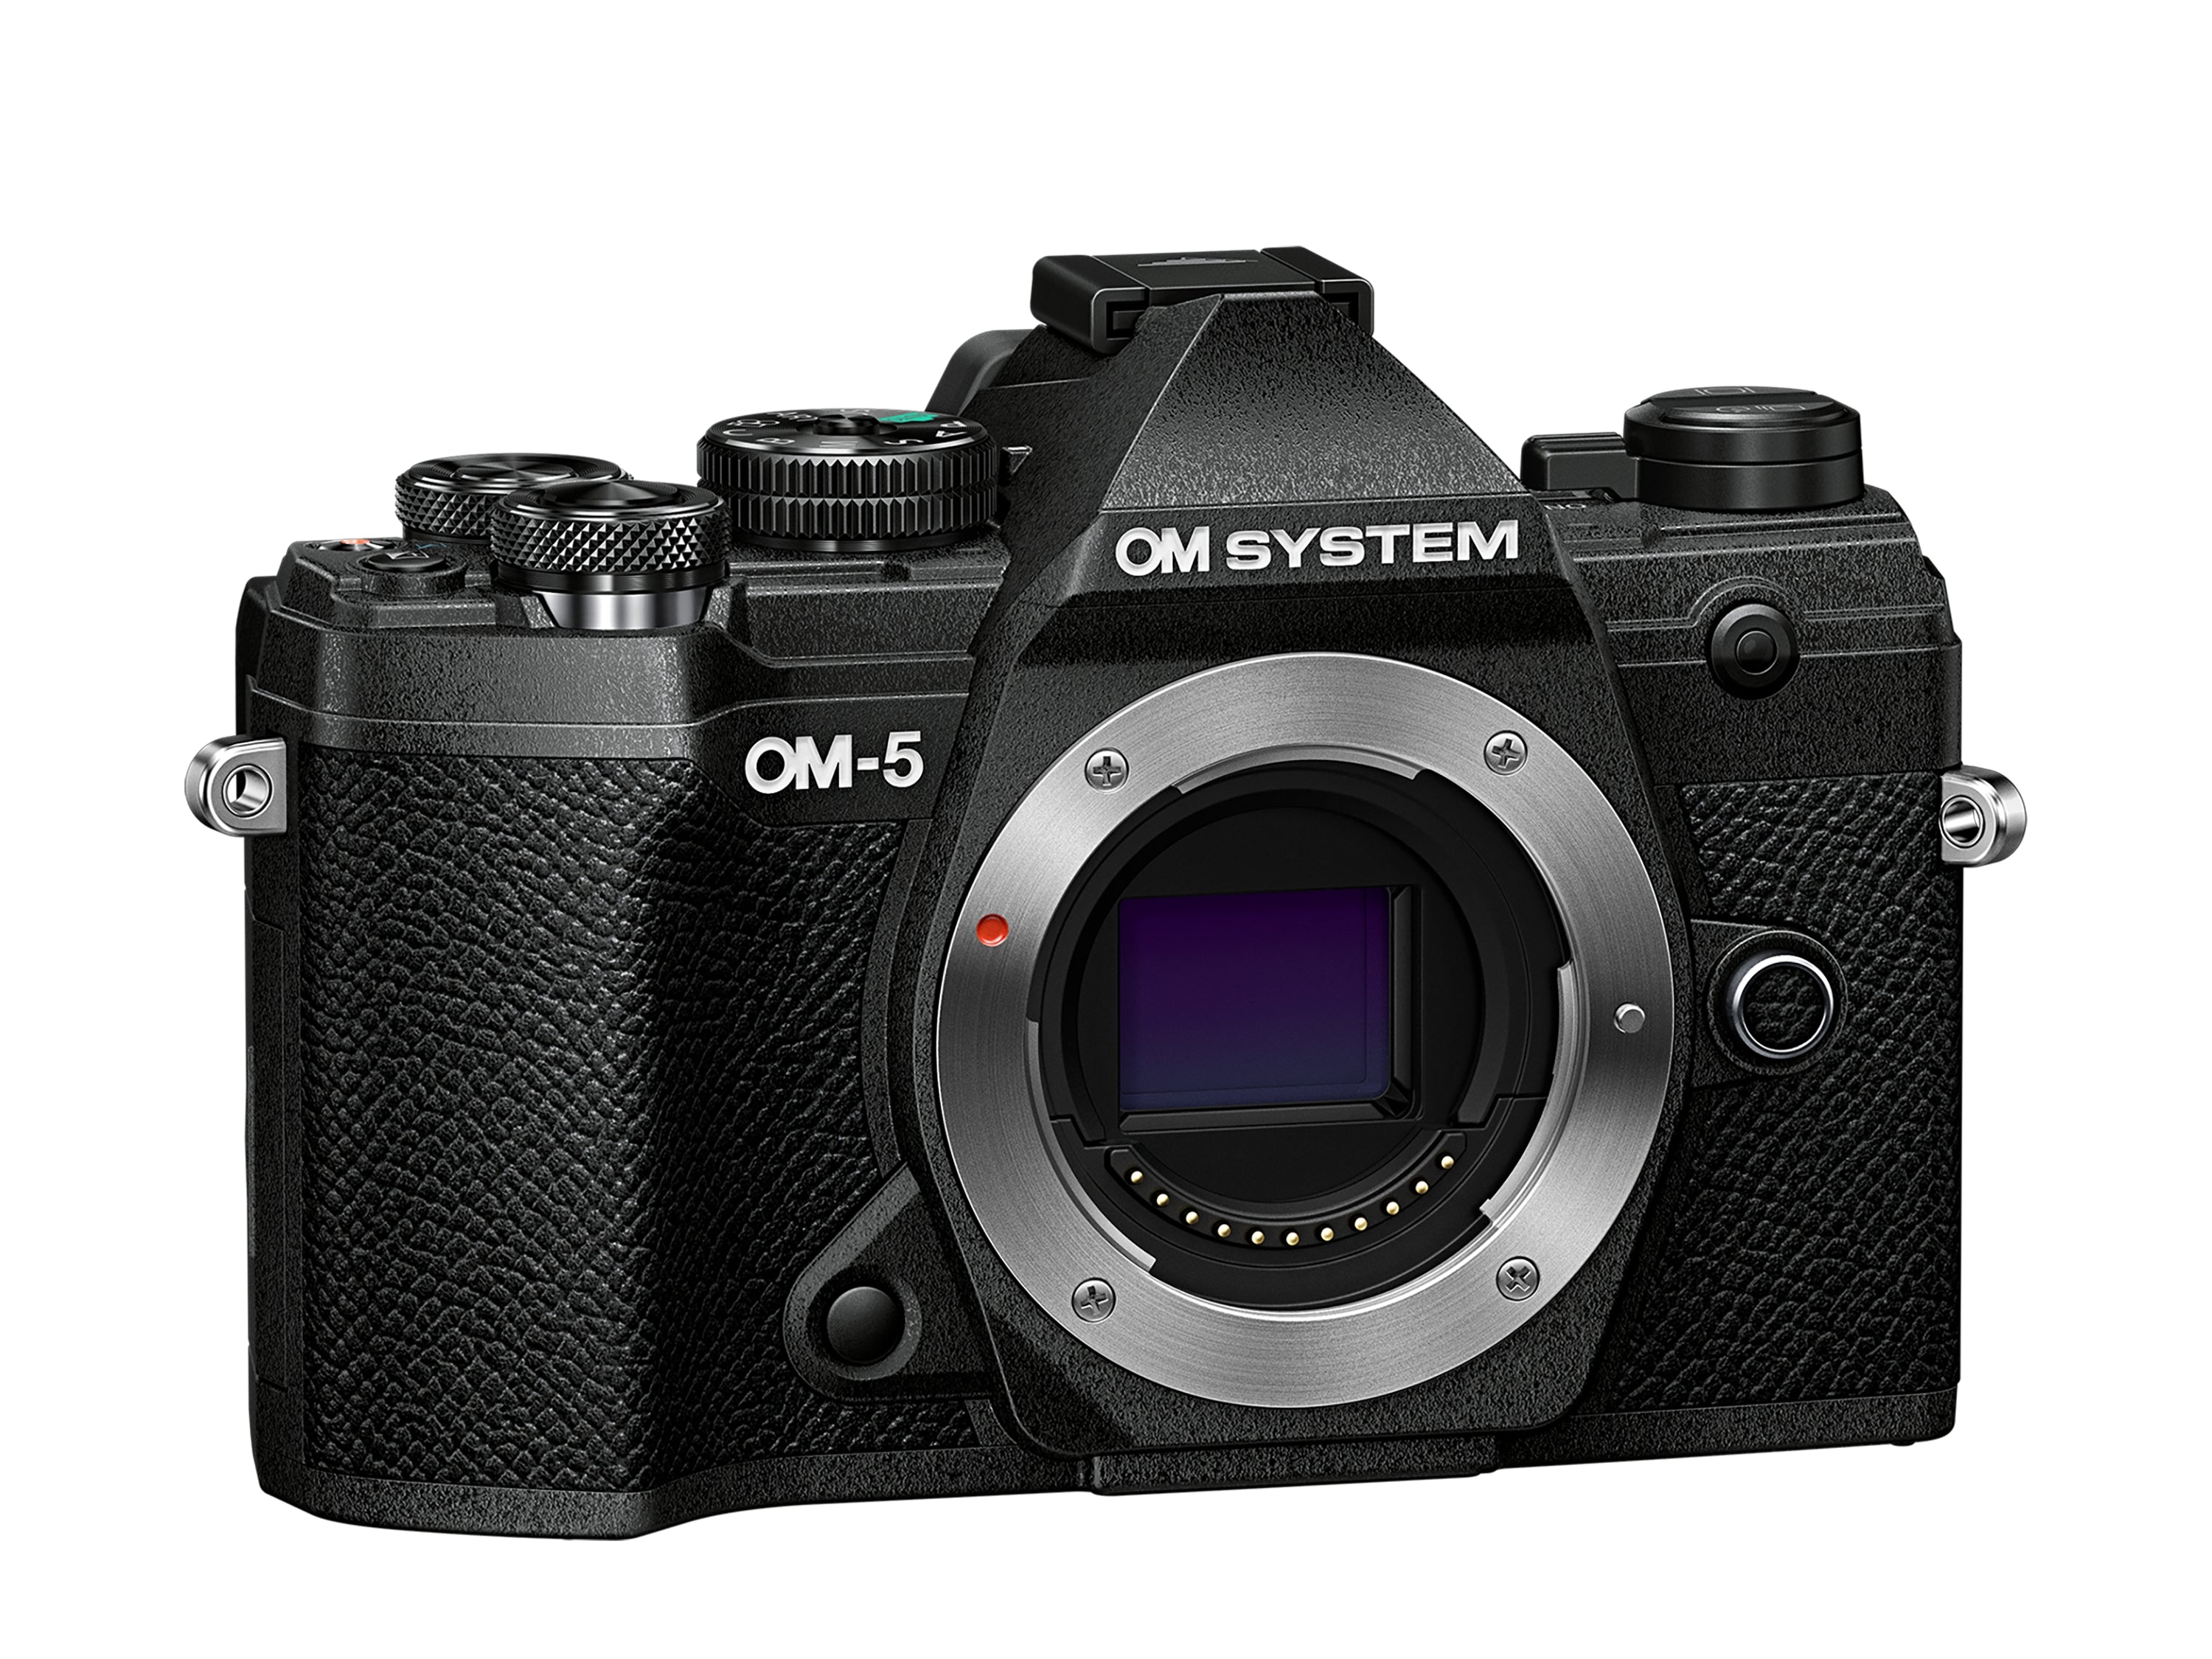 Product Image of Olympus OM System OM-5 Body Mirrorless Digital Camera